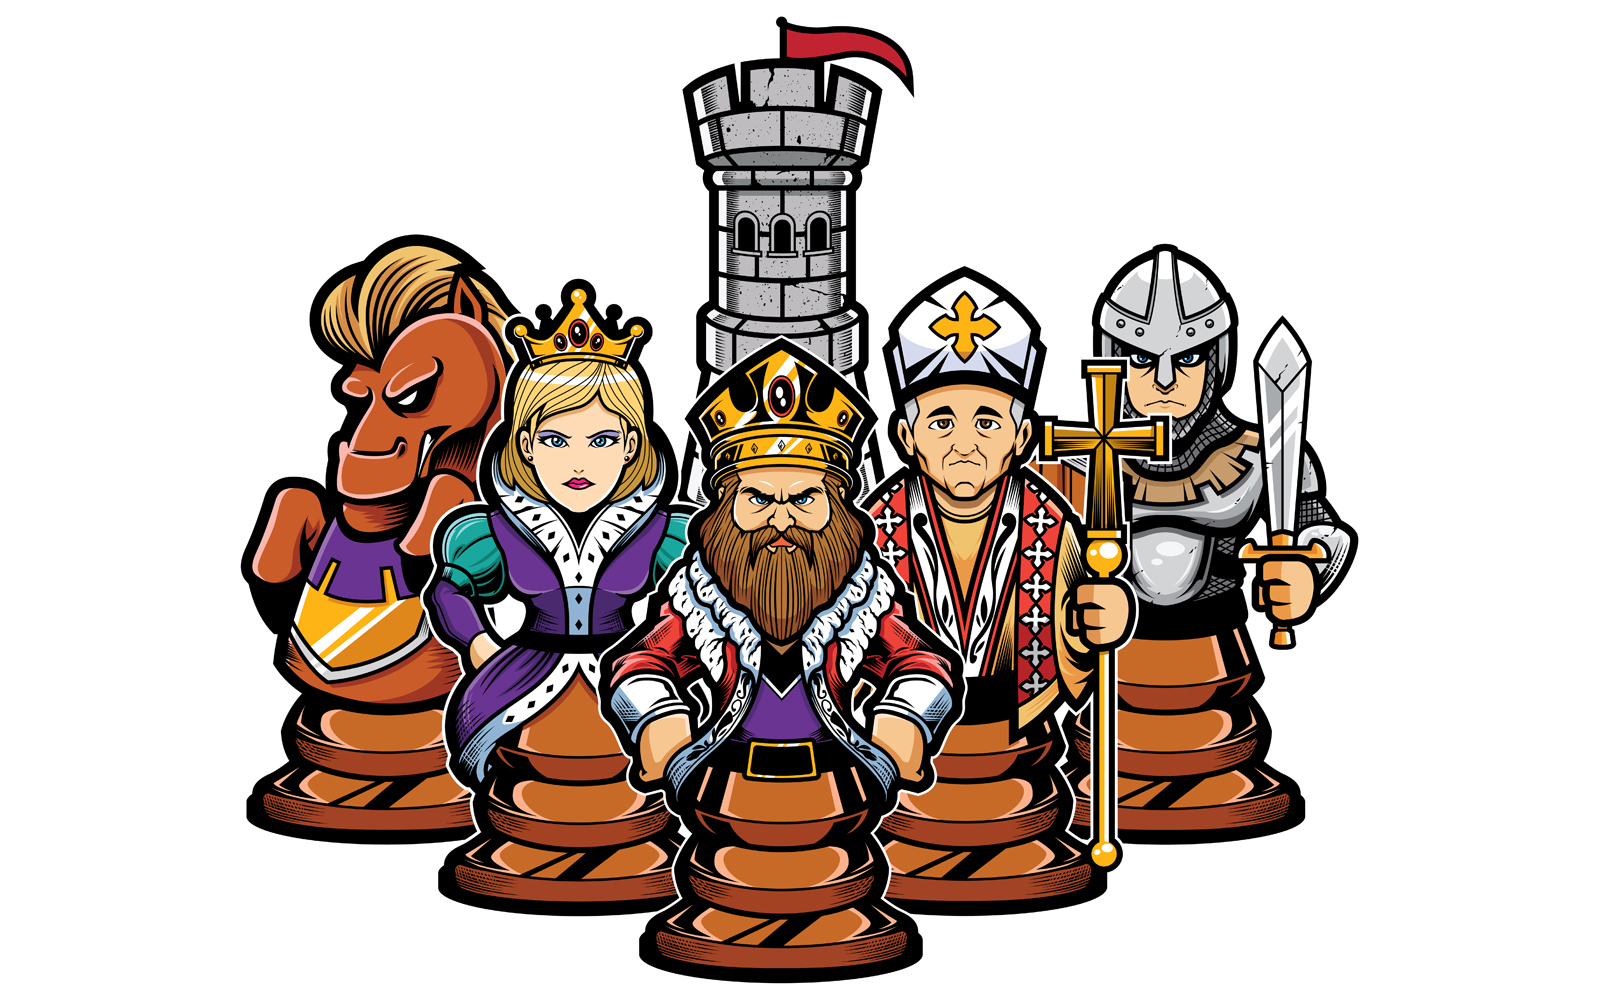 Chess Team - Illustration